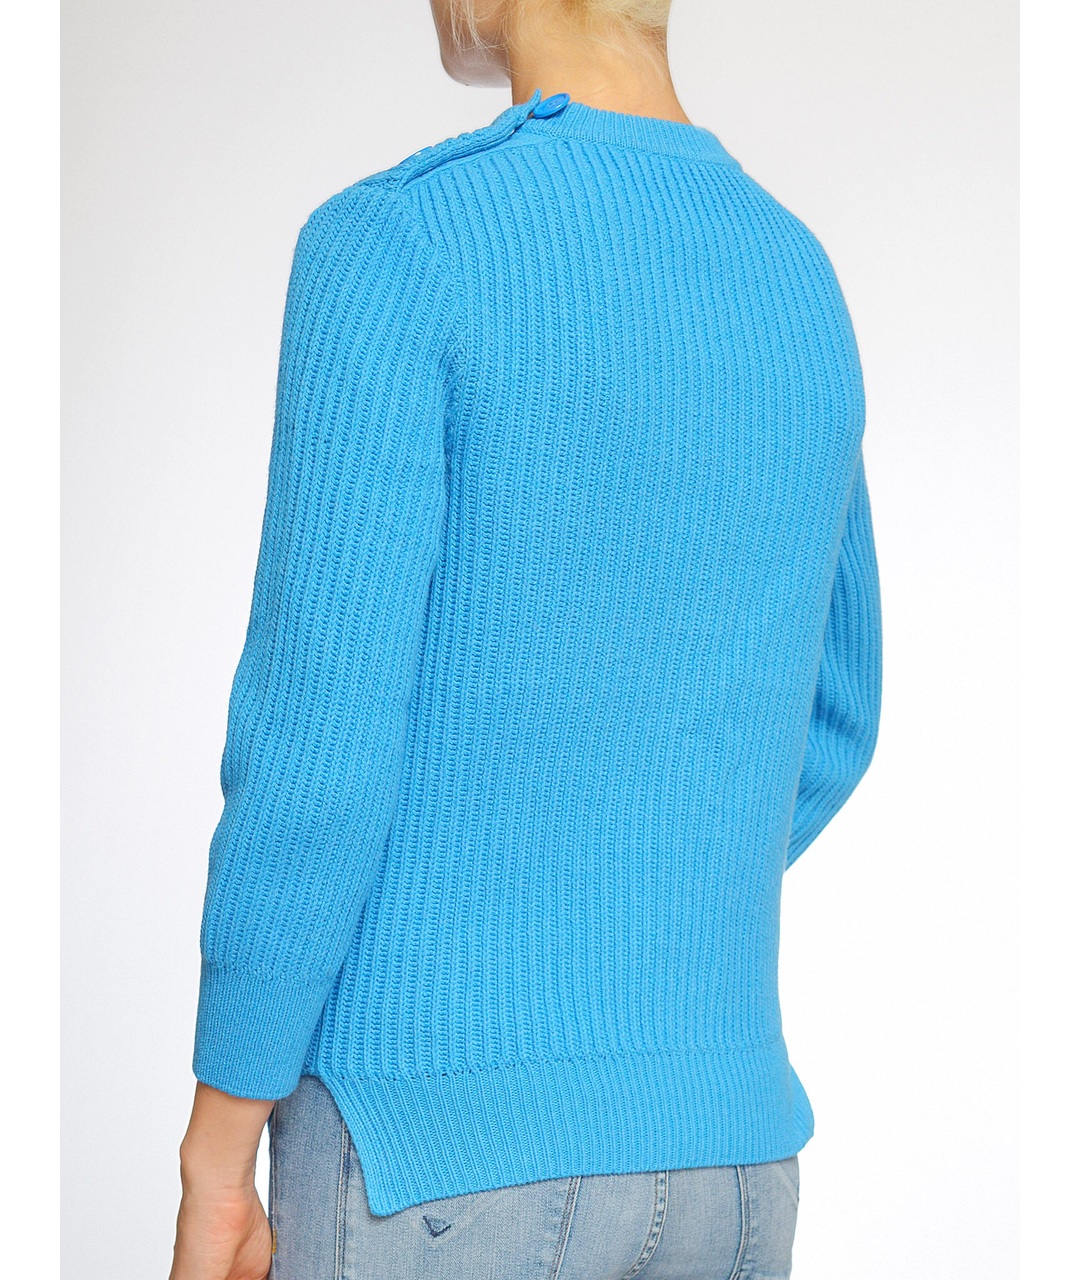 NINA RICCI Голубой шерстяной джемпер / свитер, фото 2